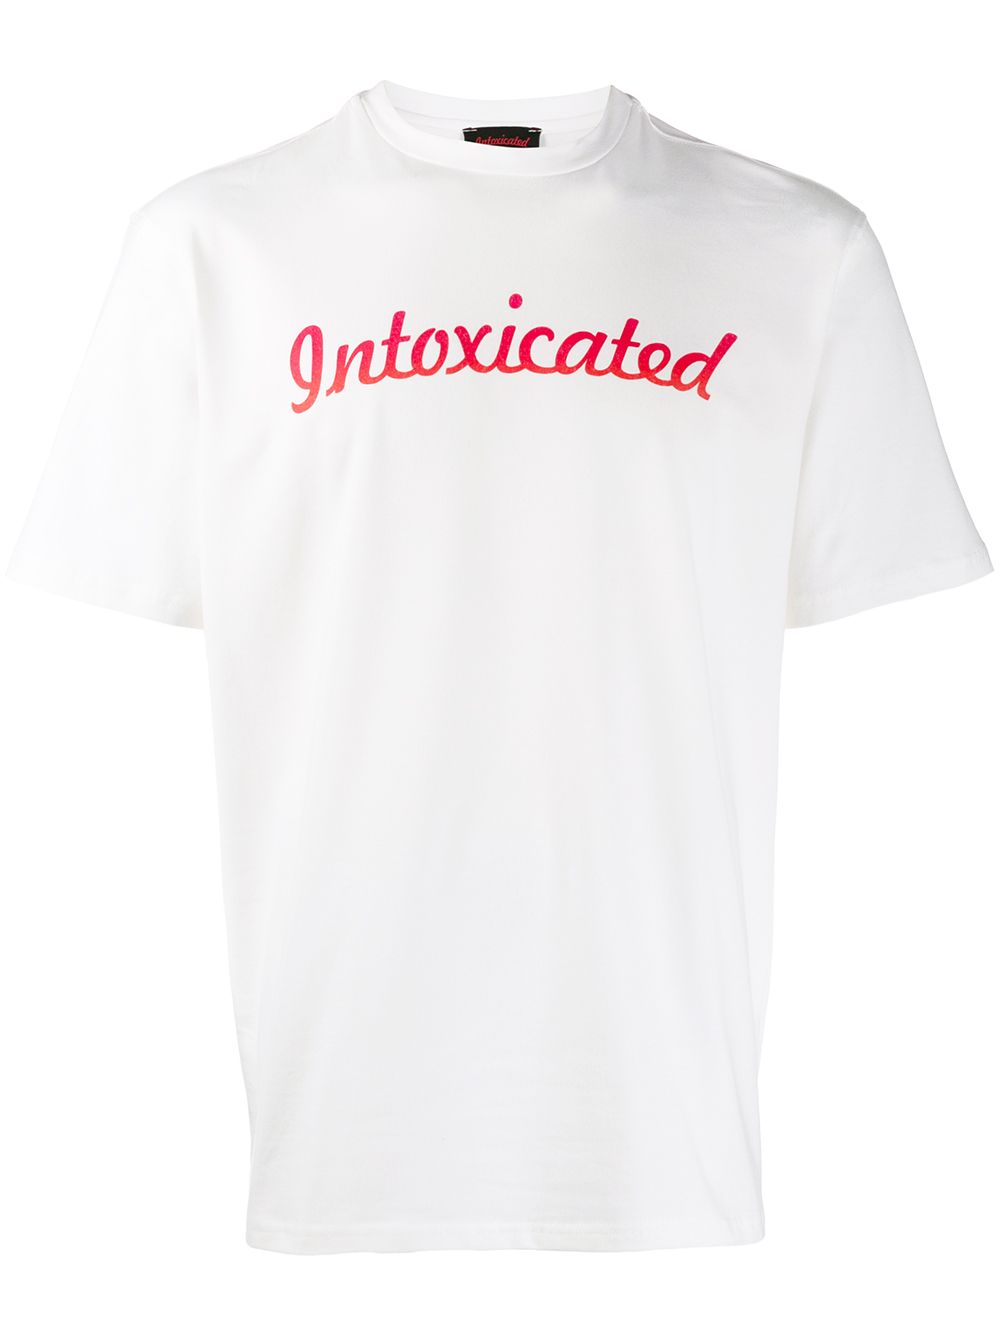 фото Intoxicated футболка с логотипом